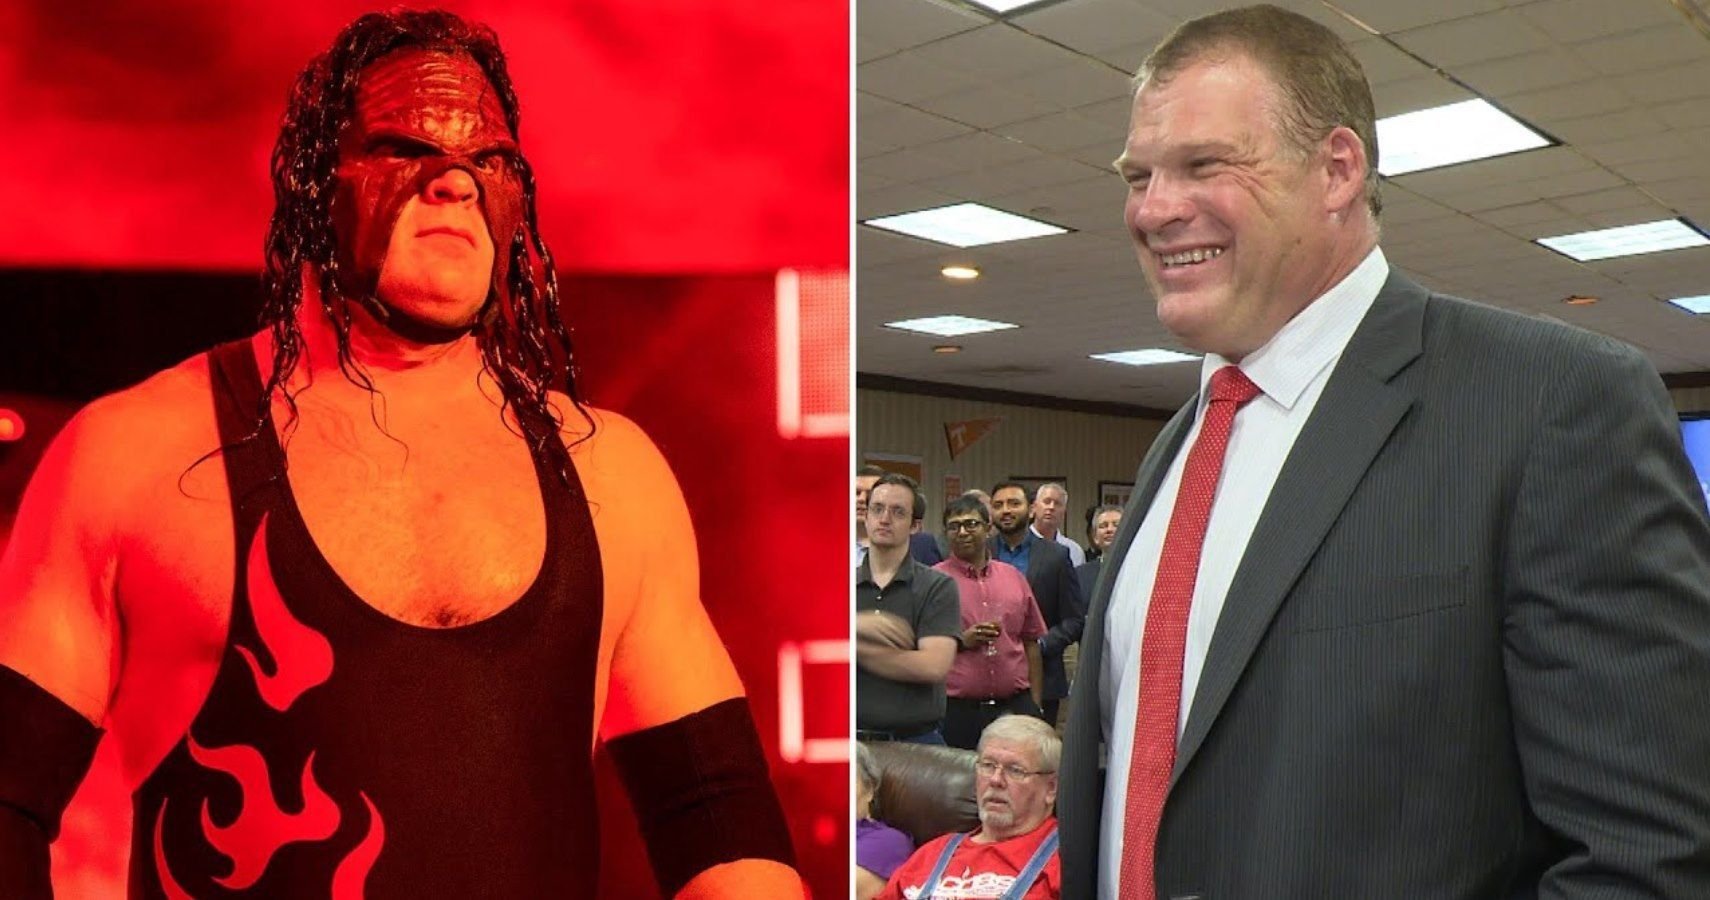 10 Things About Kane's Career That Made No Sense